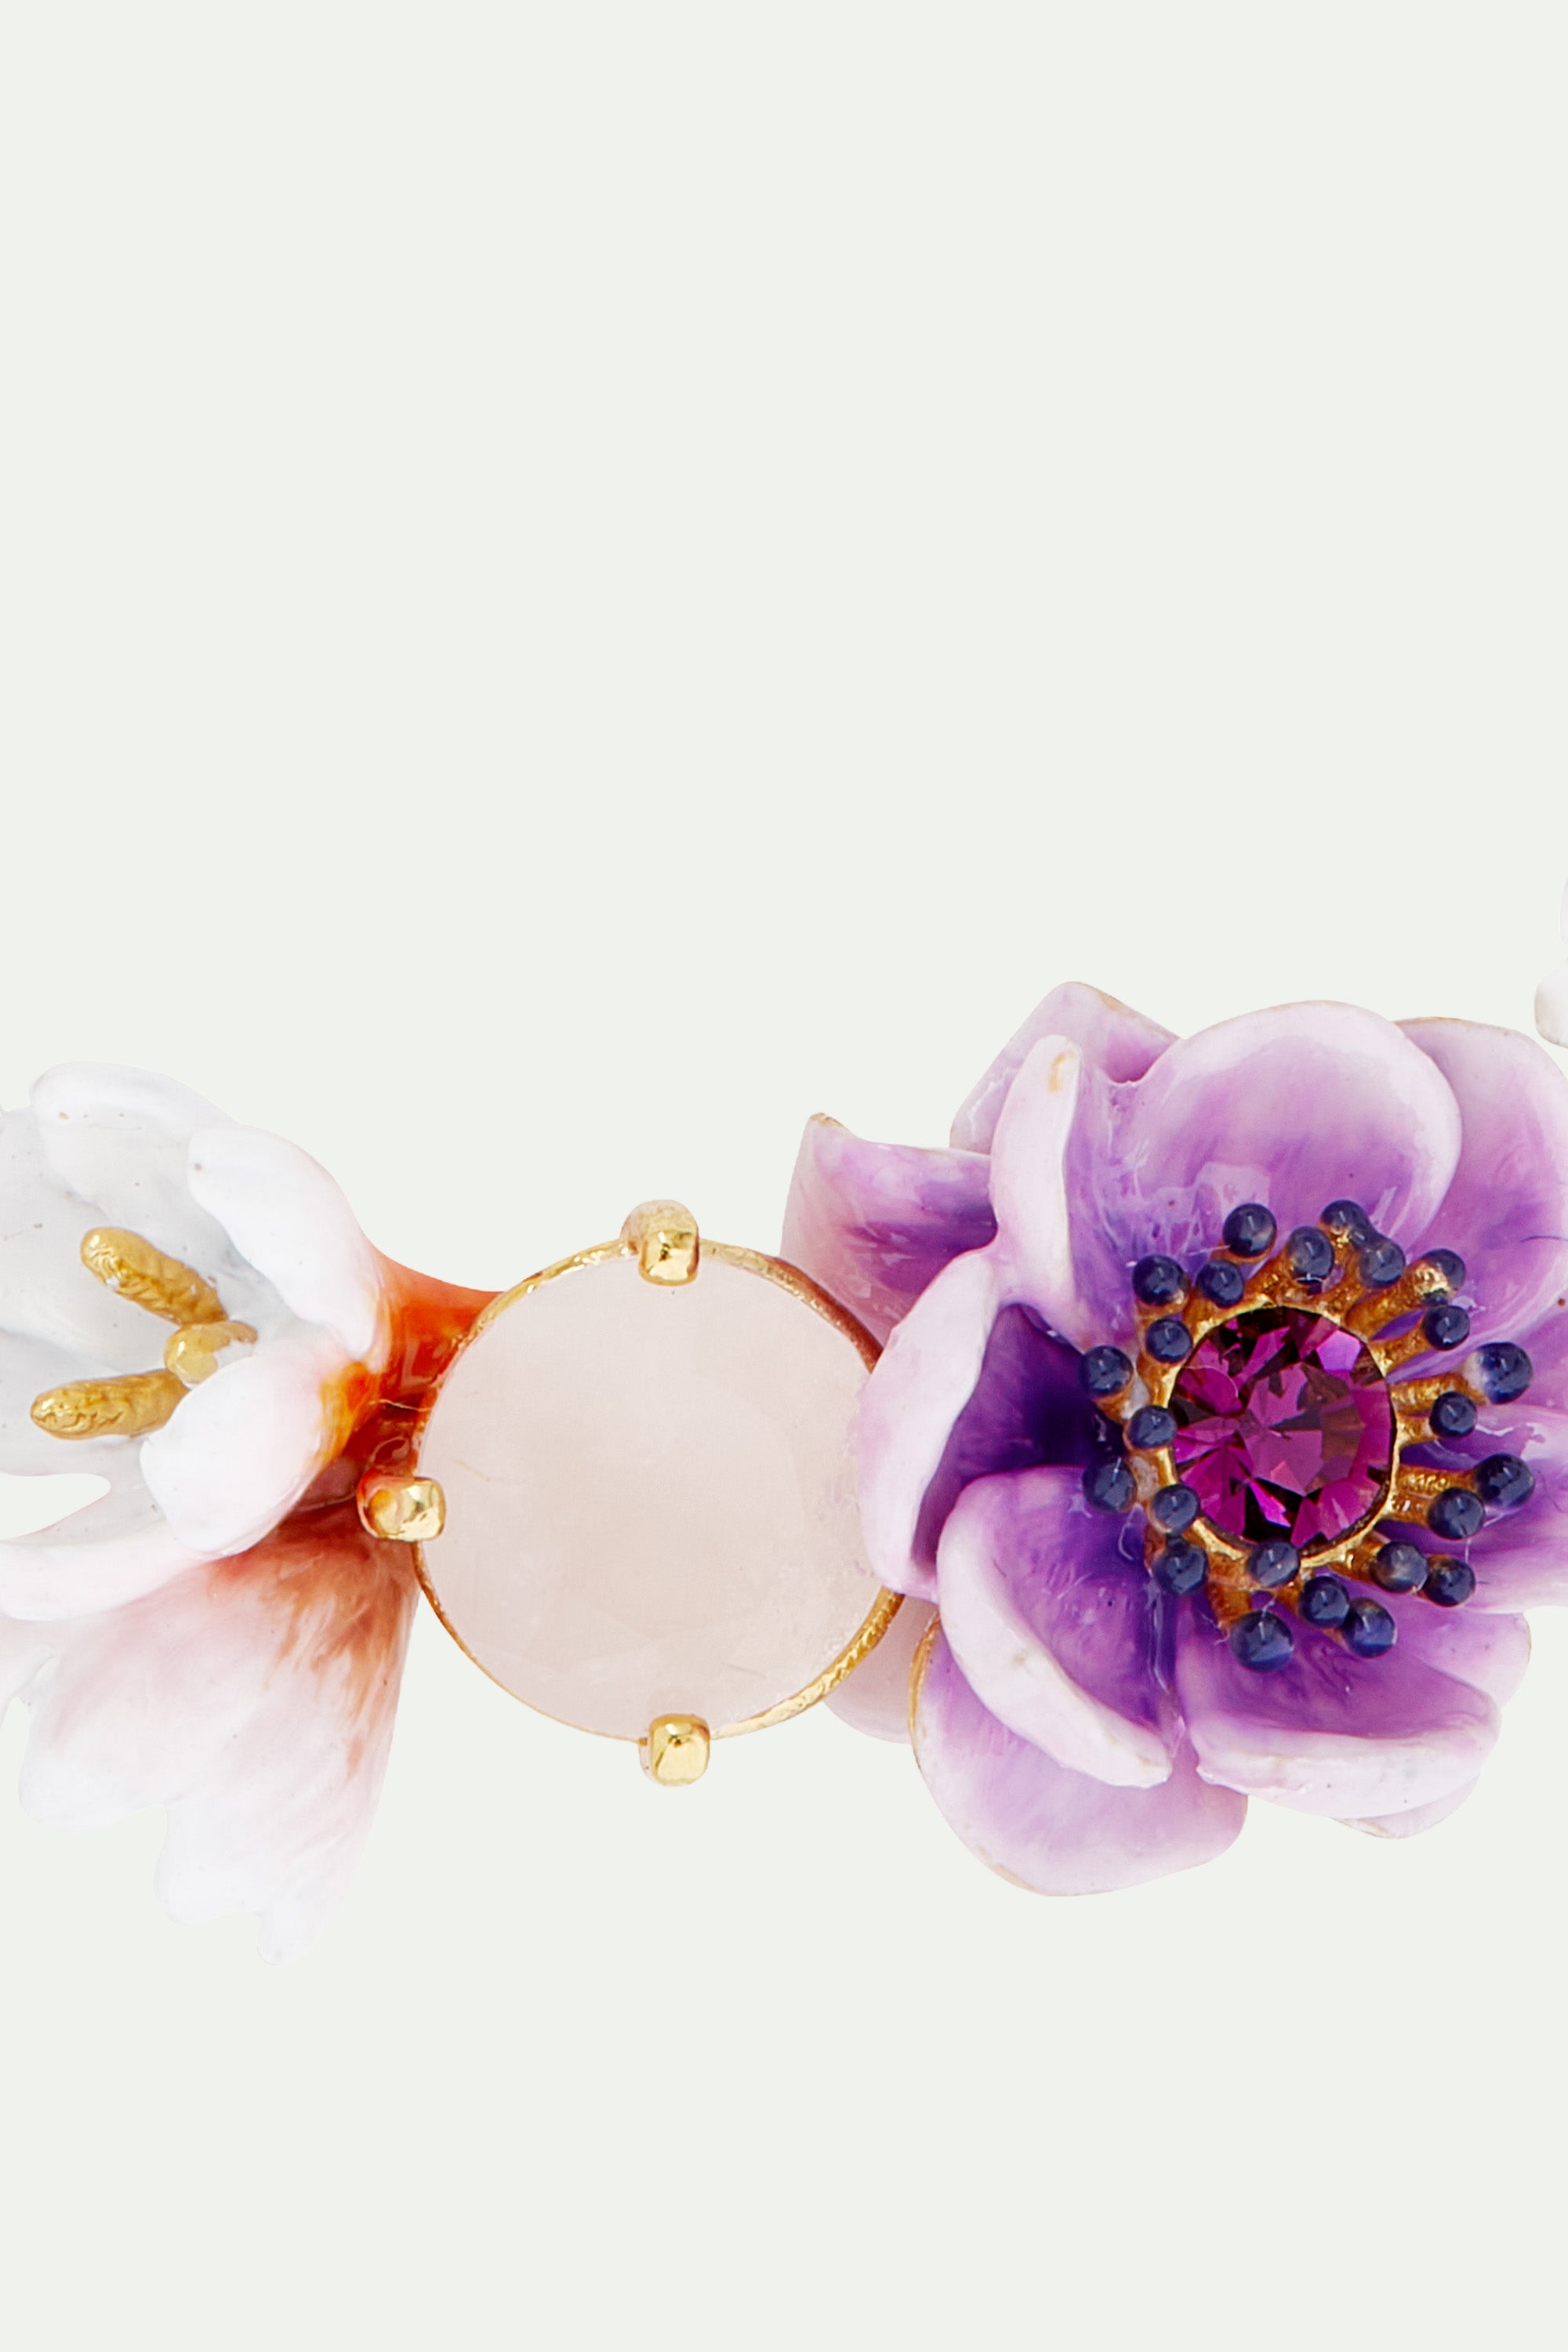 Boho 3 flower statement necklace